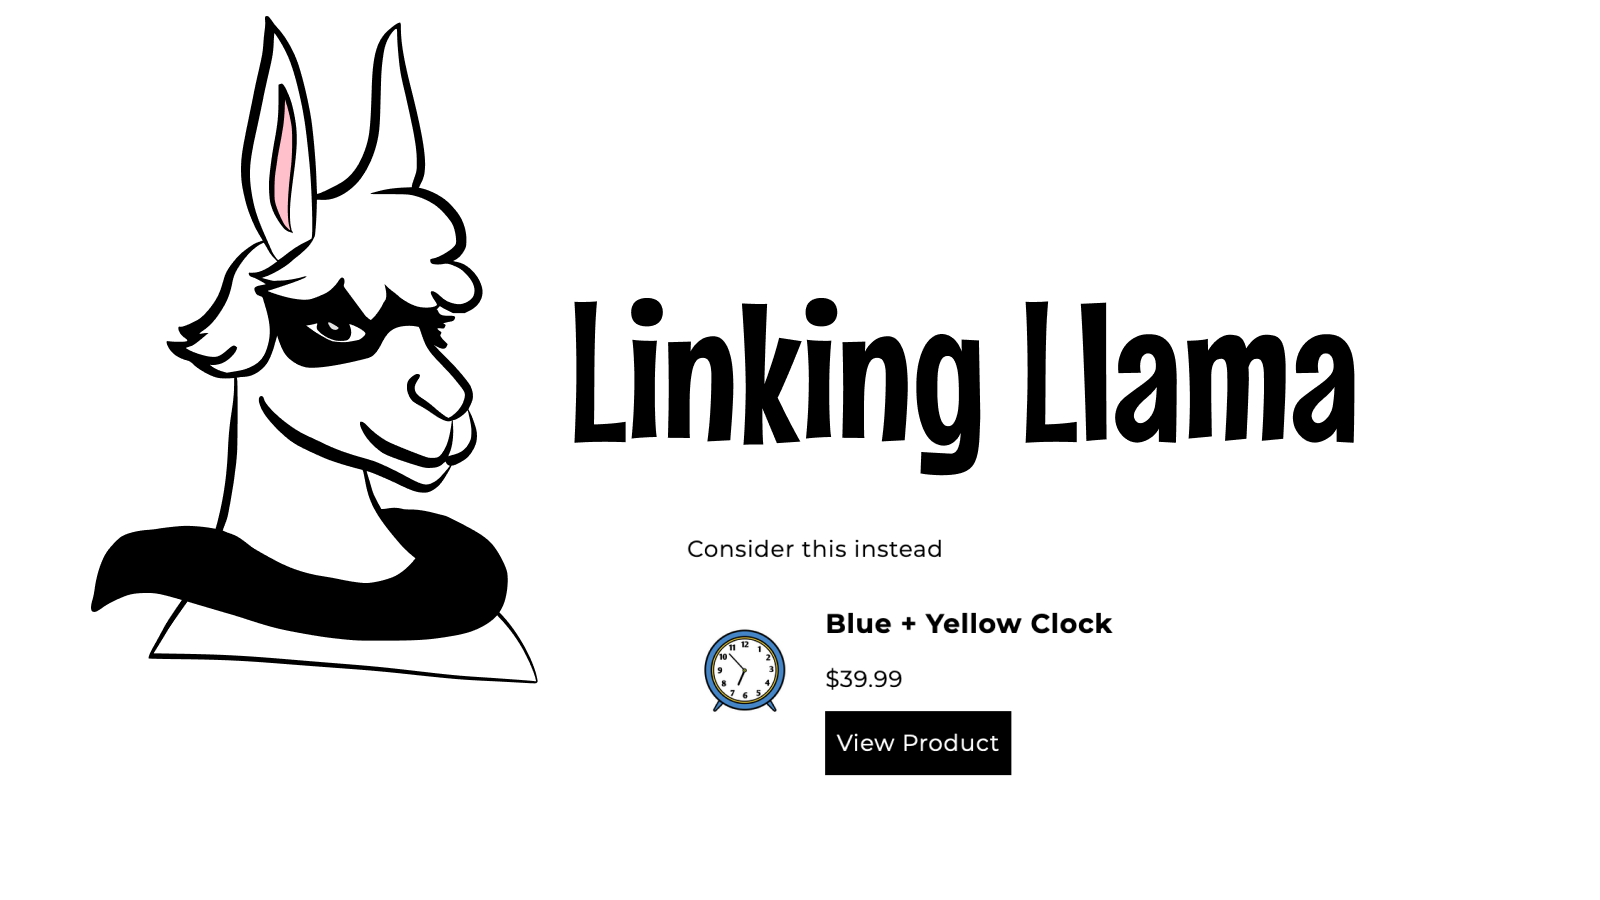 Linking Llama logo with an alternative product block